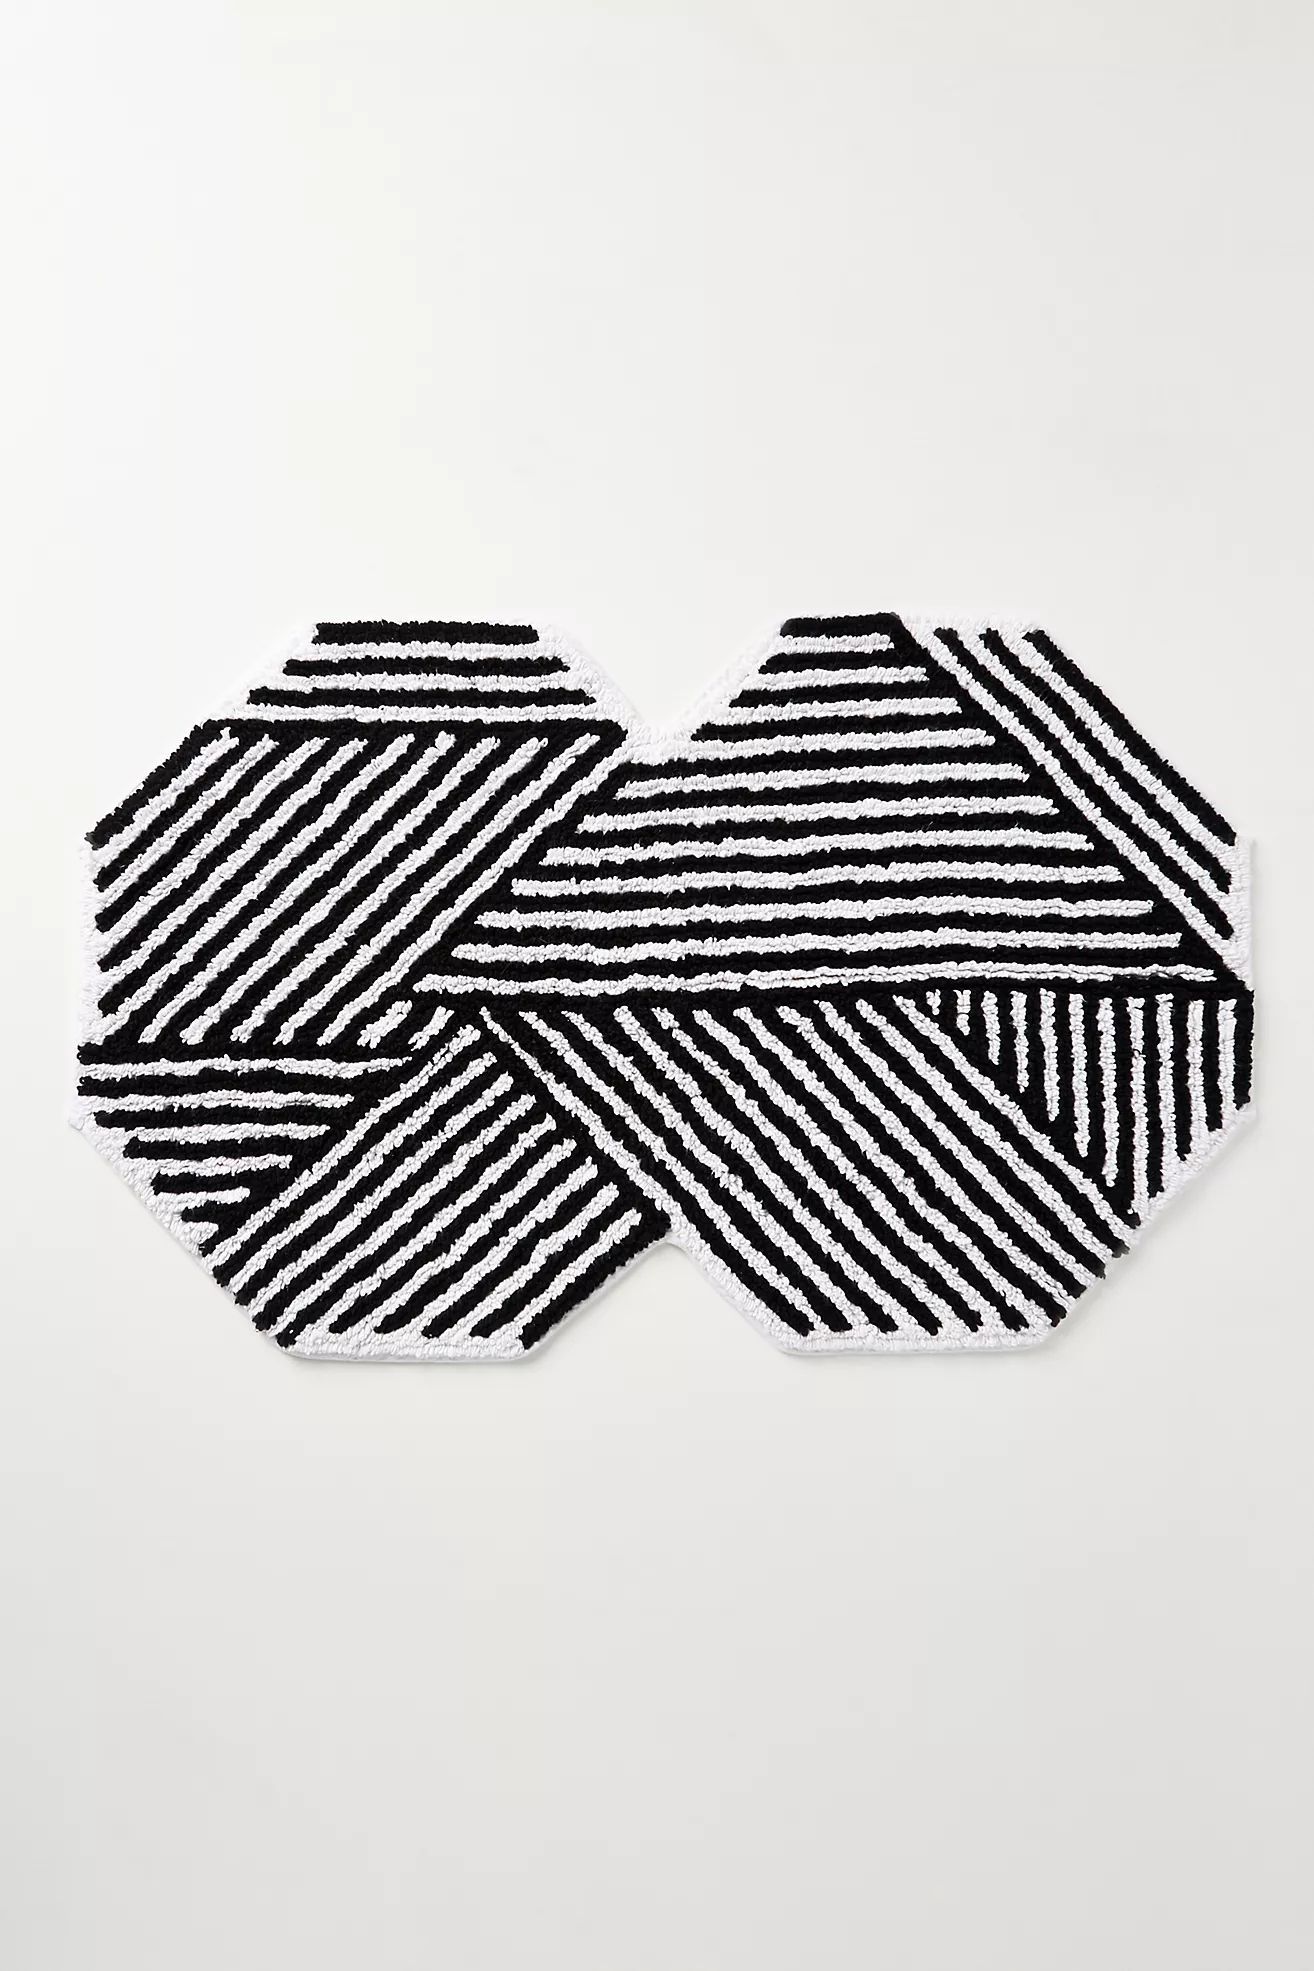 Tufted Stripe Illusion Bath Mat | Anthropologie (US)